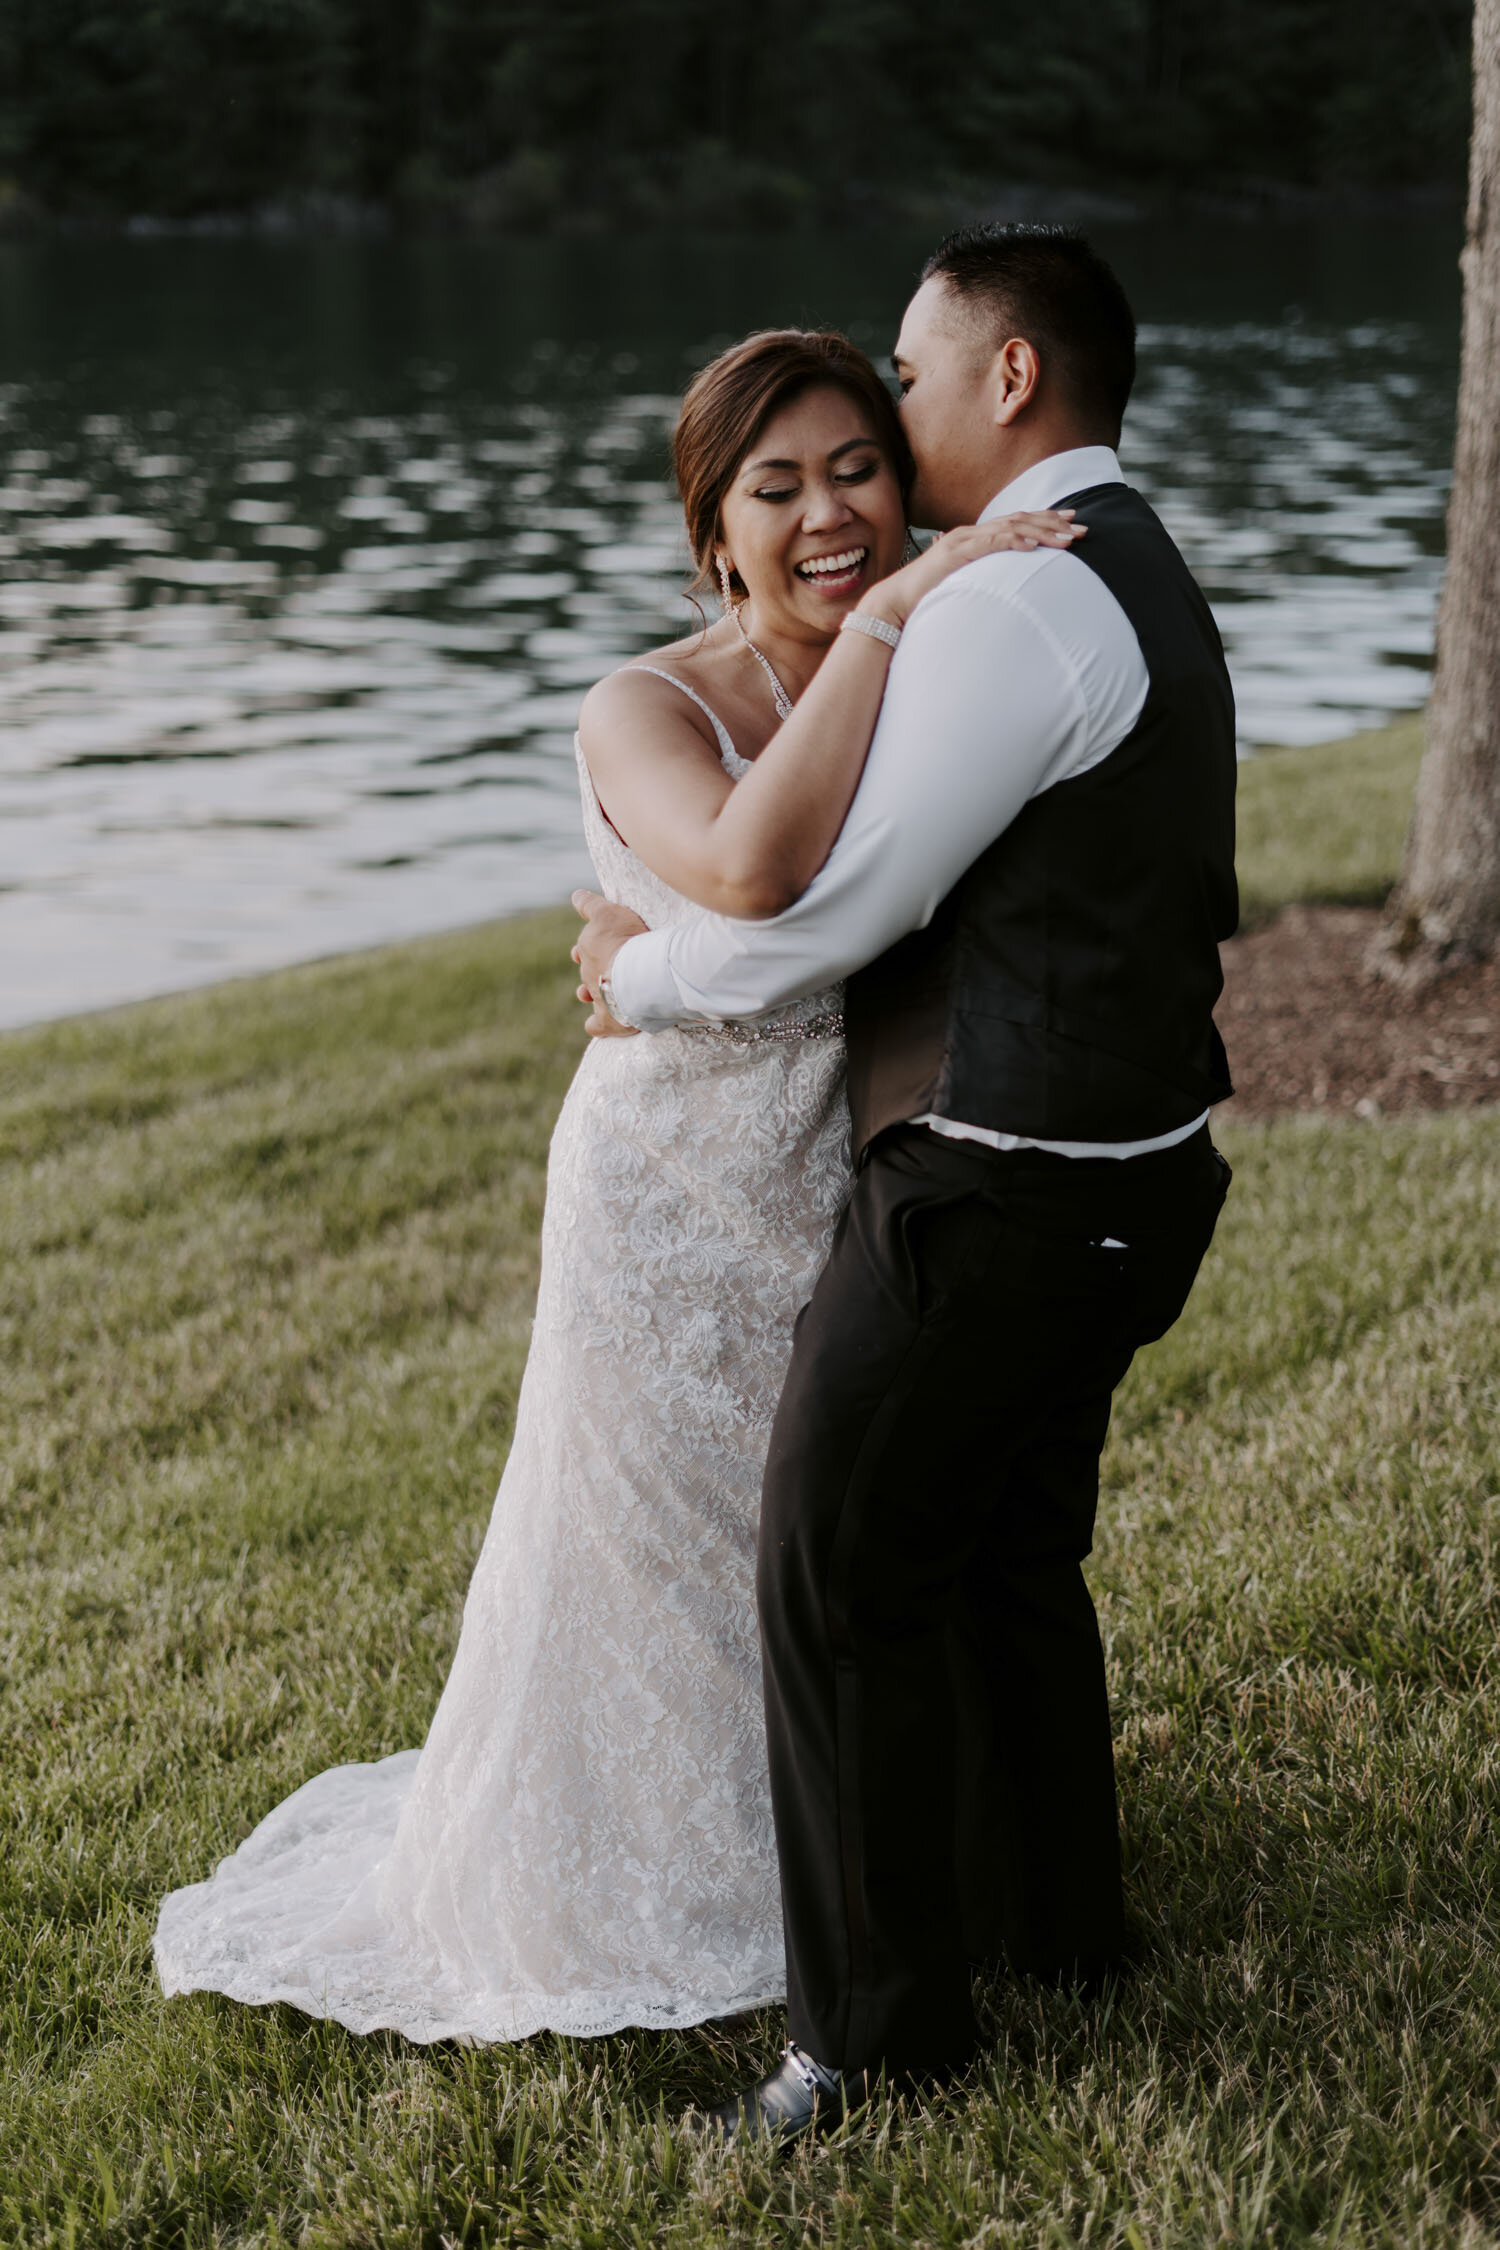 Greensboro Winston-Salem, NC Wedding Photography at Belews Lake | Bella Collina Mansion Bride and Groom Portraits | Kayli LaFon Wedding Photographer